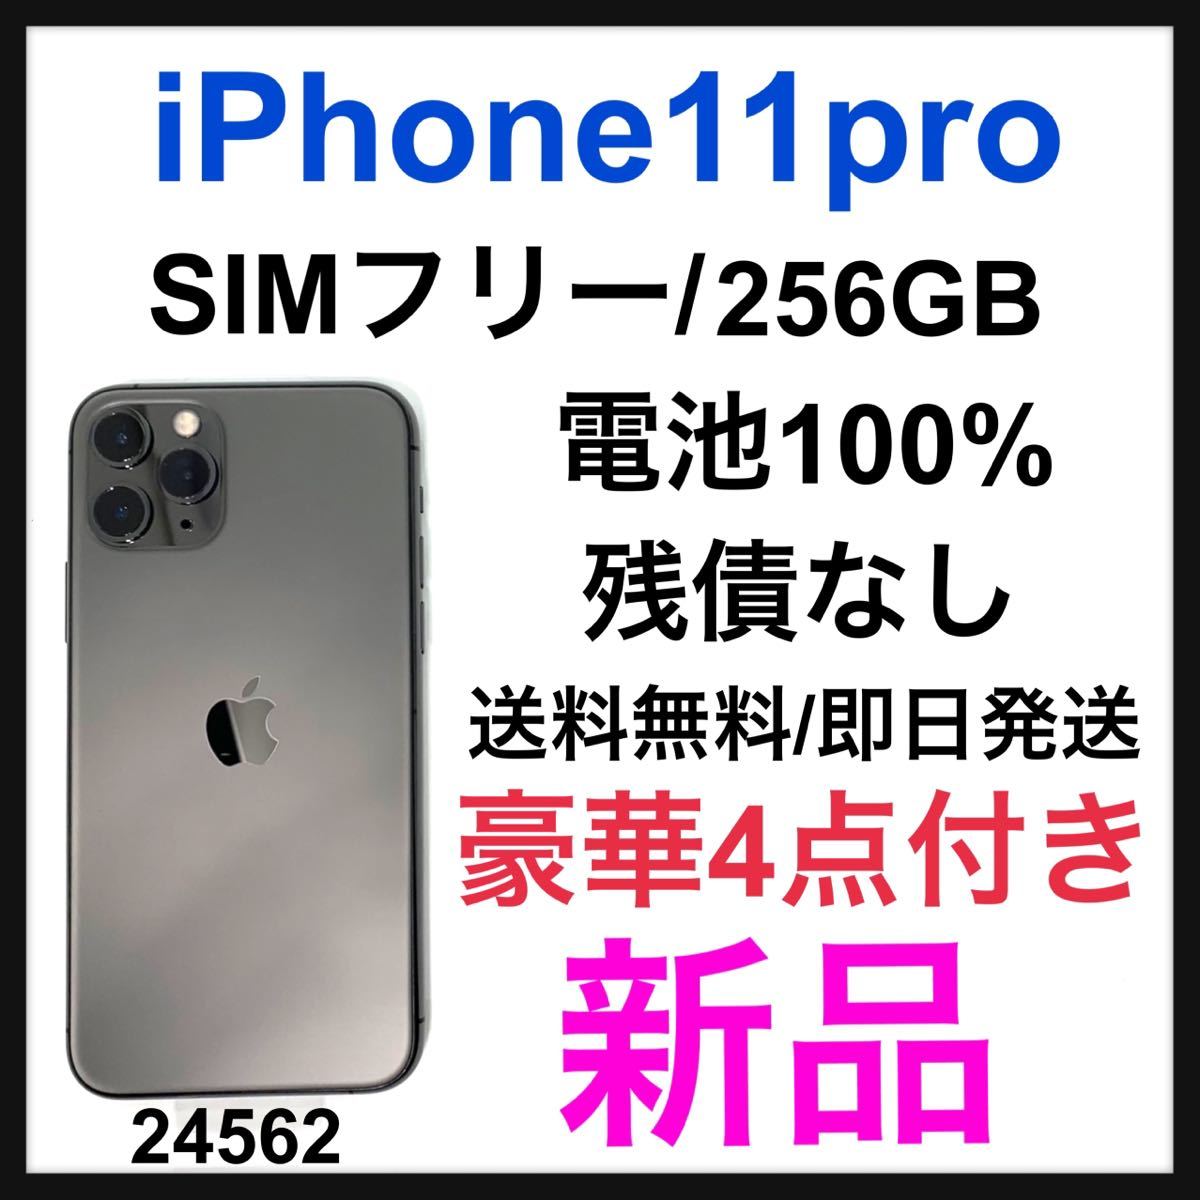 iPhone11 Pro 256GB SIMフリーの値段と価格推移は？｜177件の売買情報 